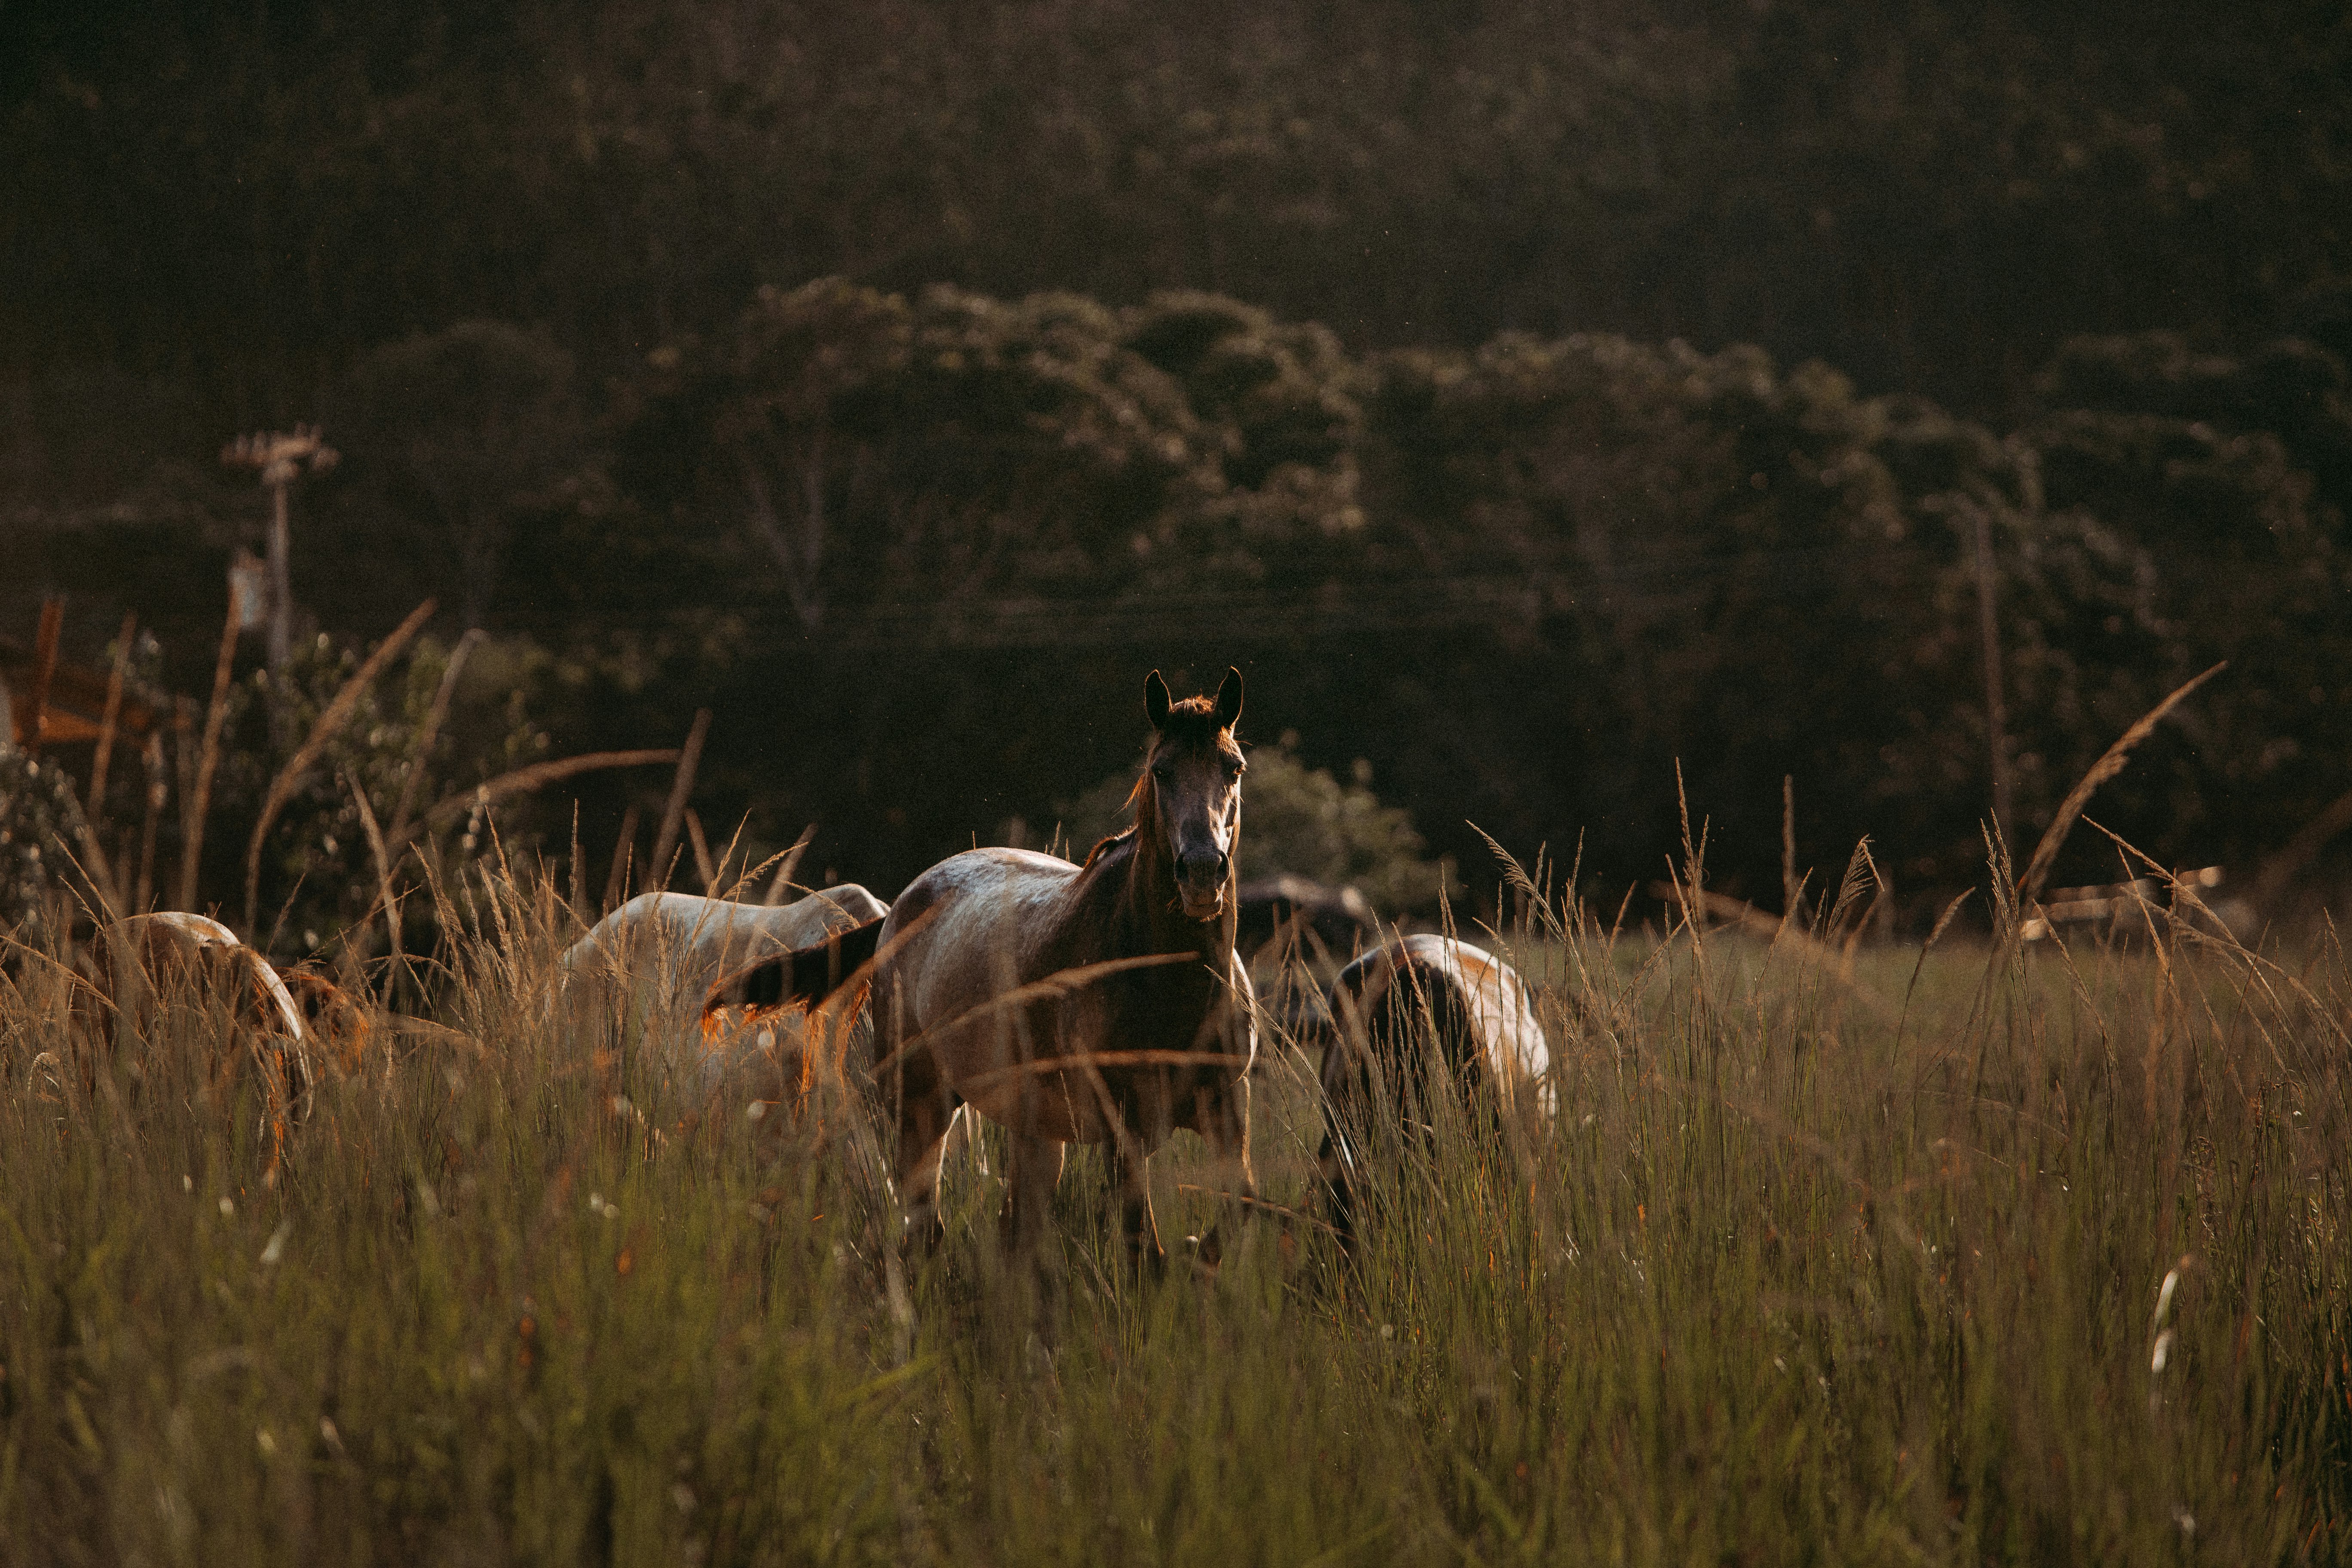 brown horse grazing in pasture